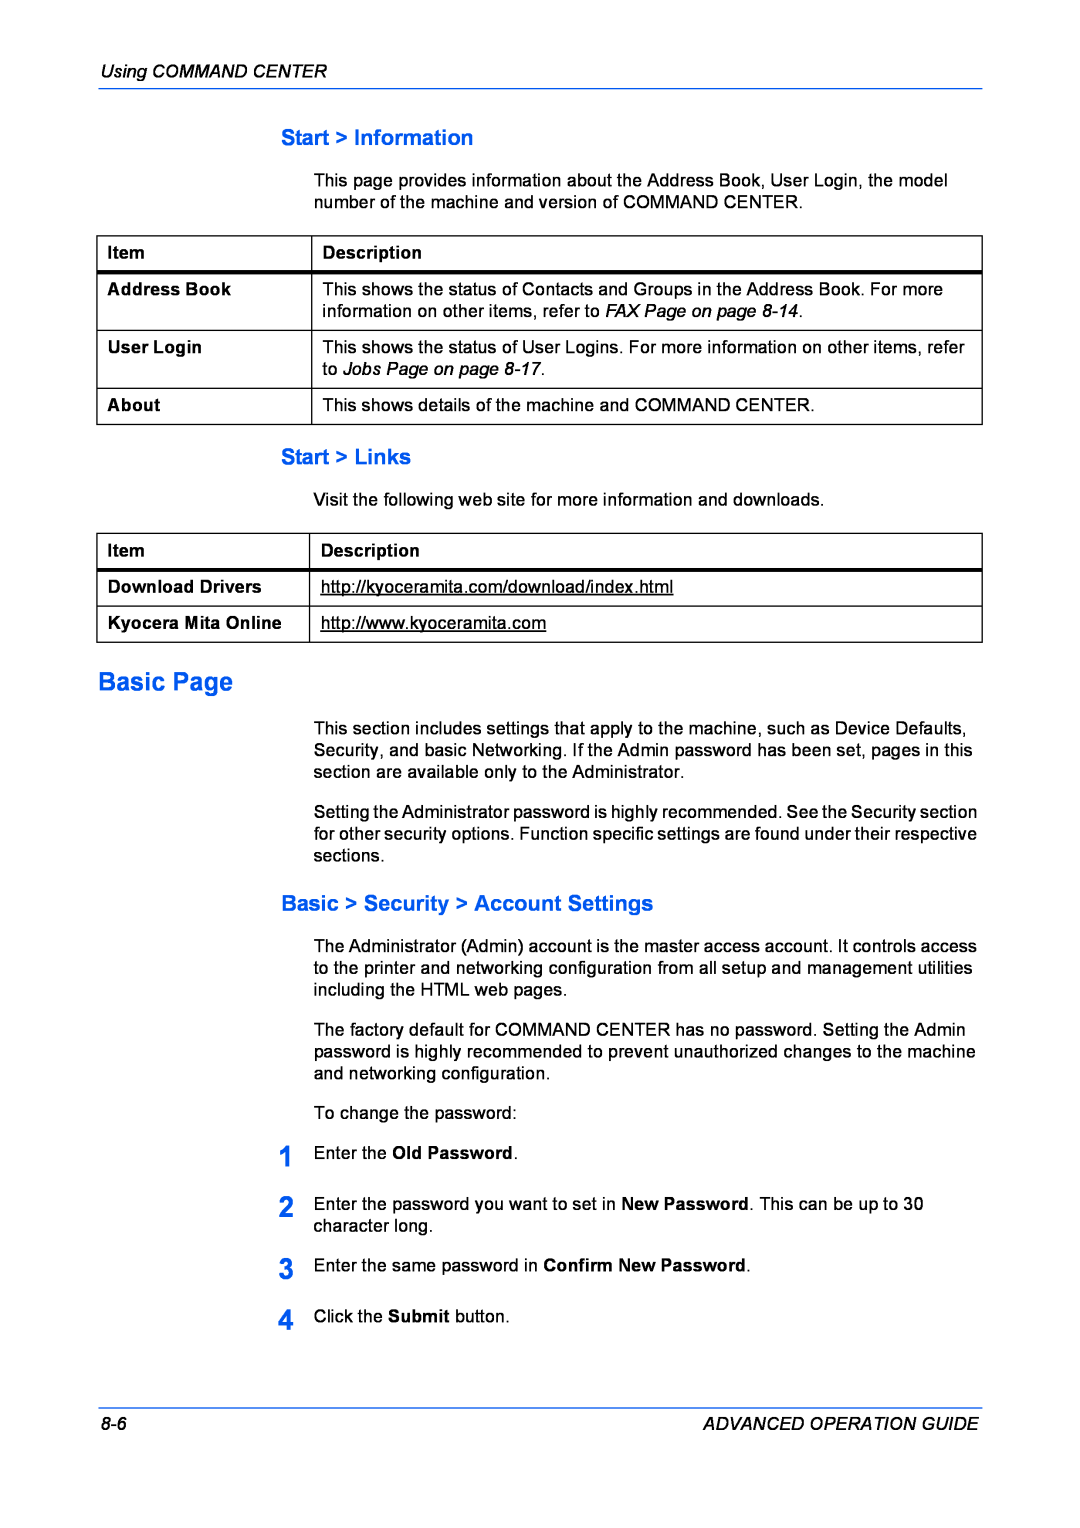 Kyocera KM-1820 manual Basic Page, Start Information, Start Links, Basic Security Account Settings 